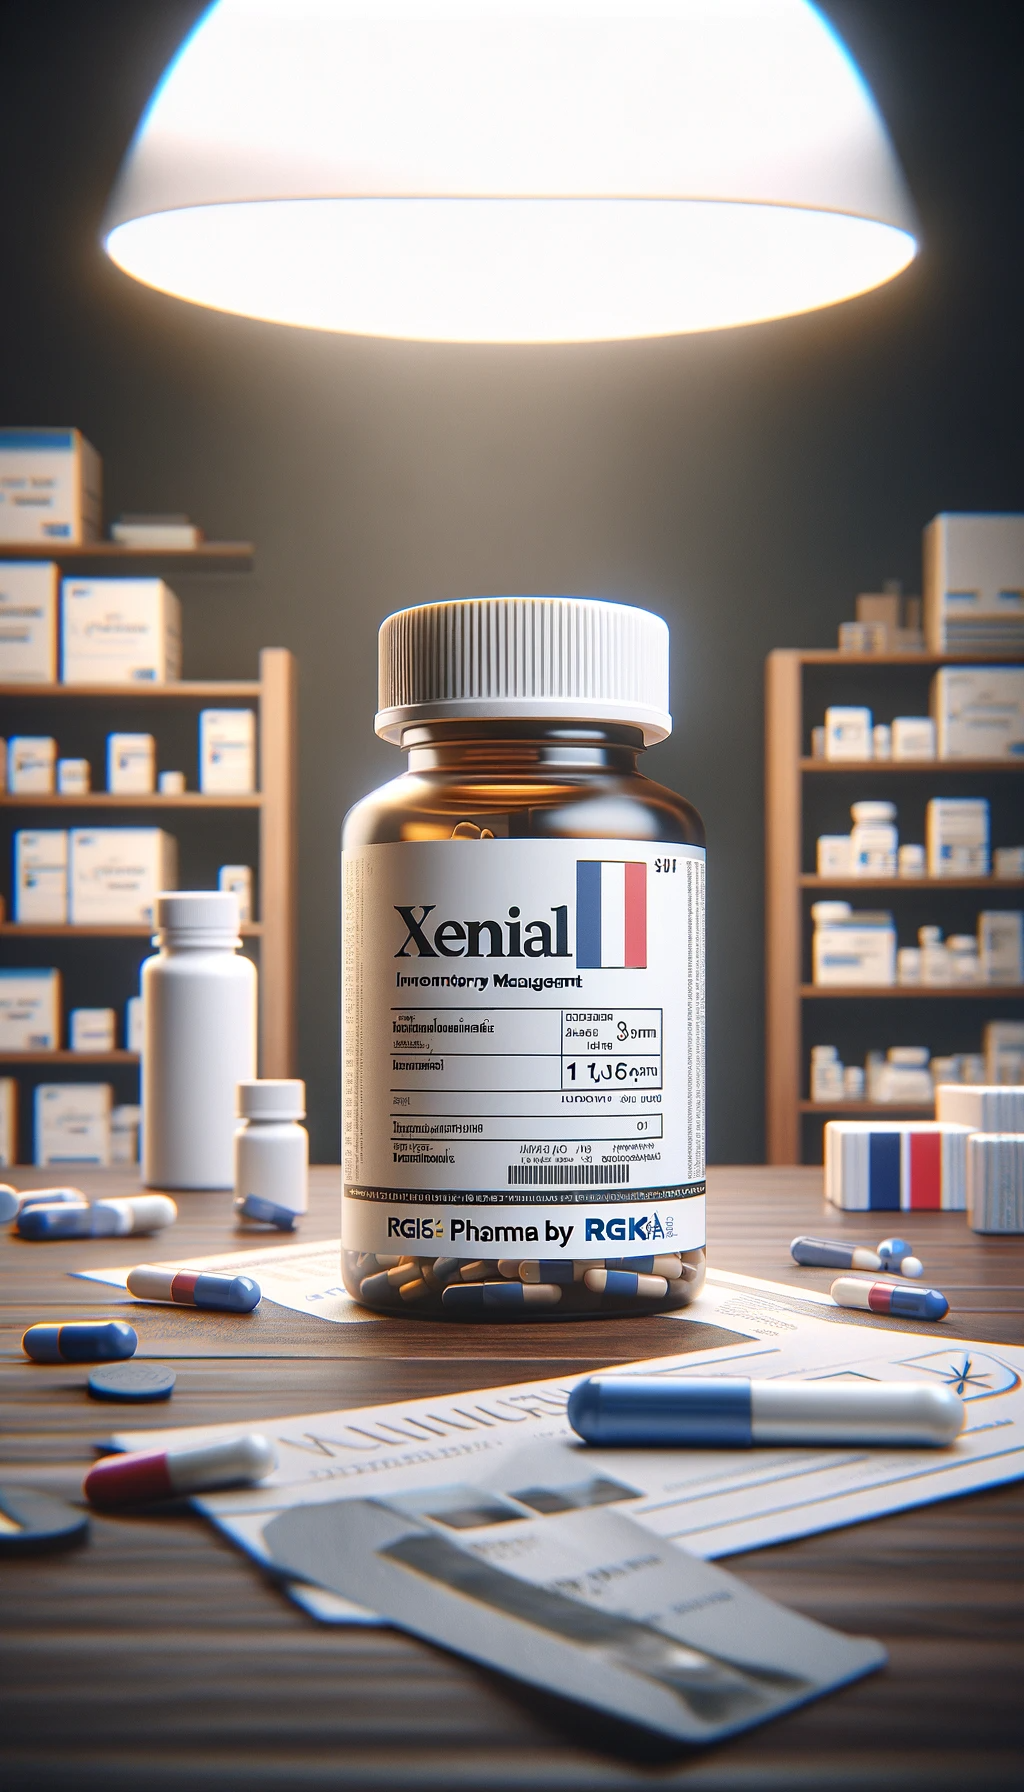 Prix xenical pharmacie